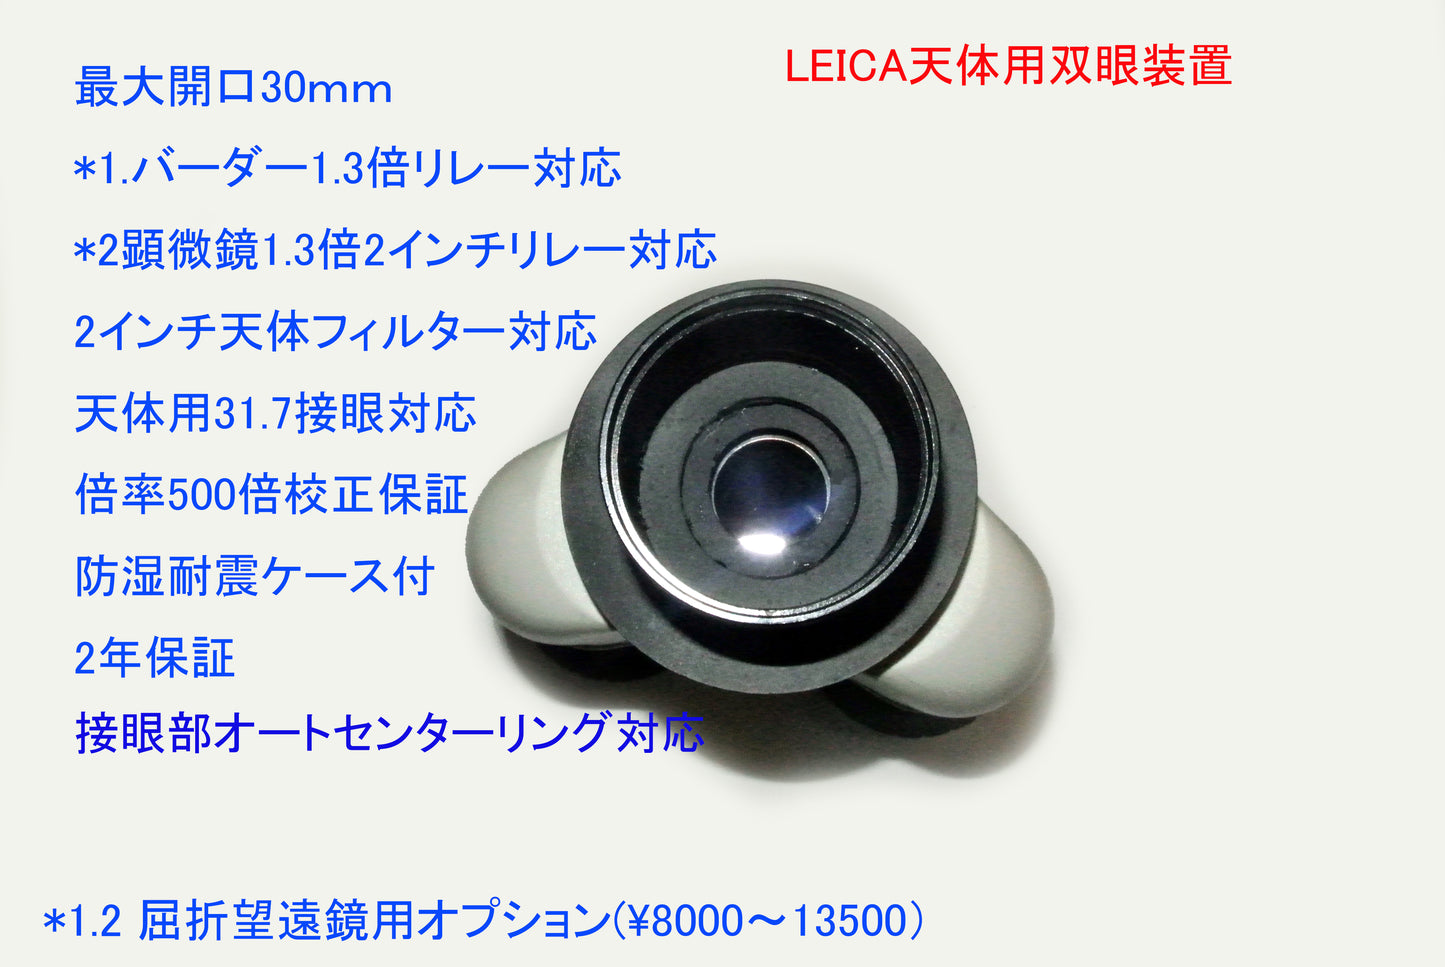 LEICA silver mirror type straight type binocular device aperture 30mm